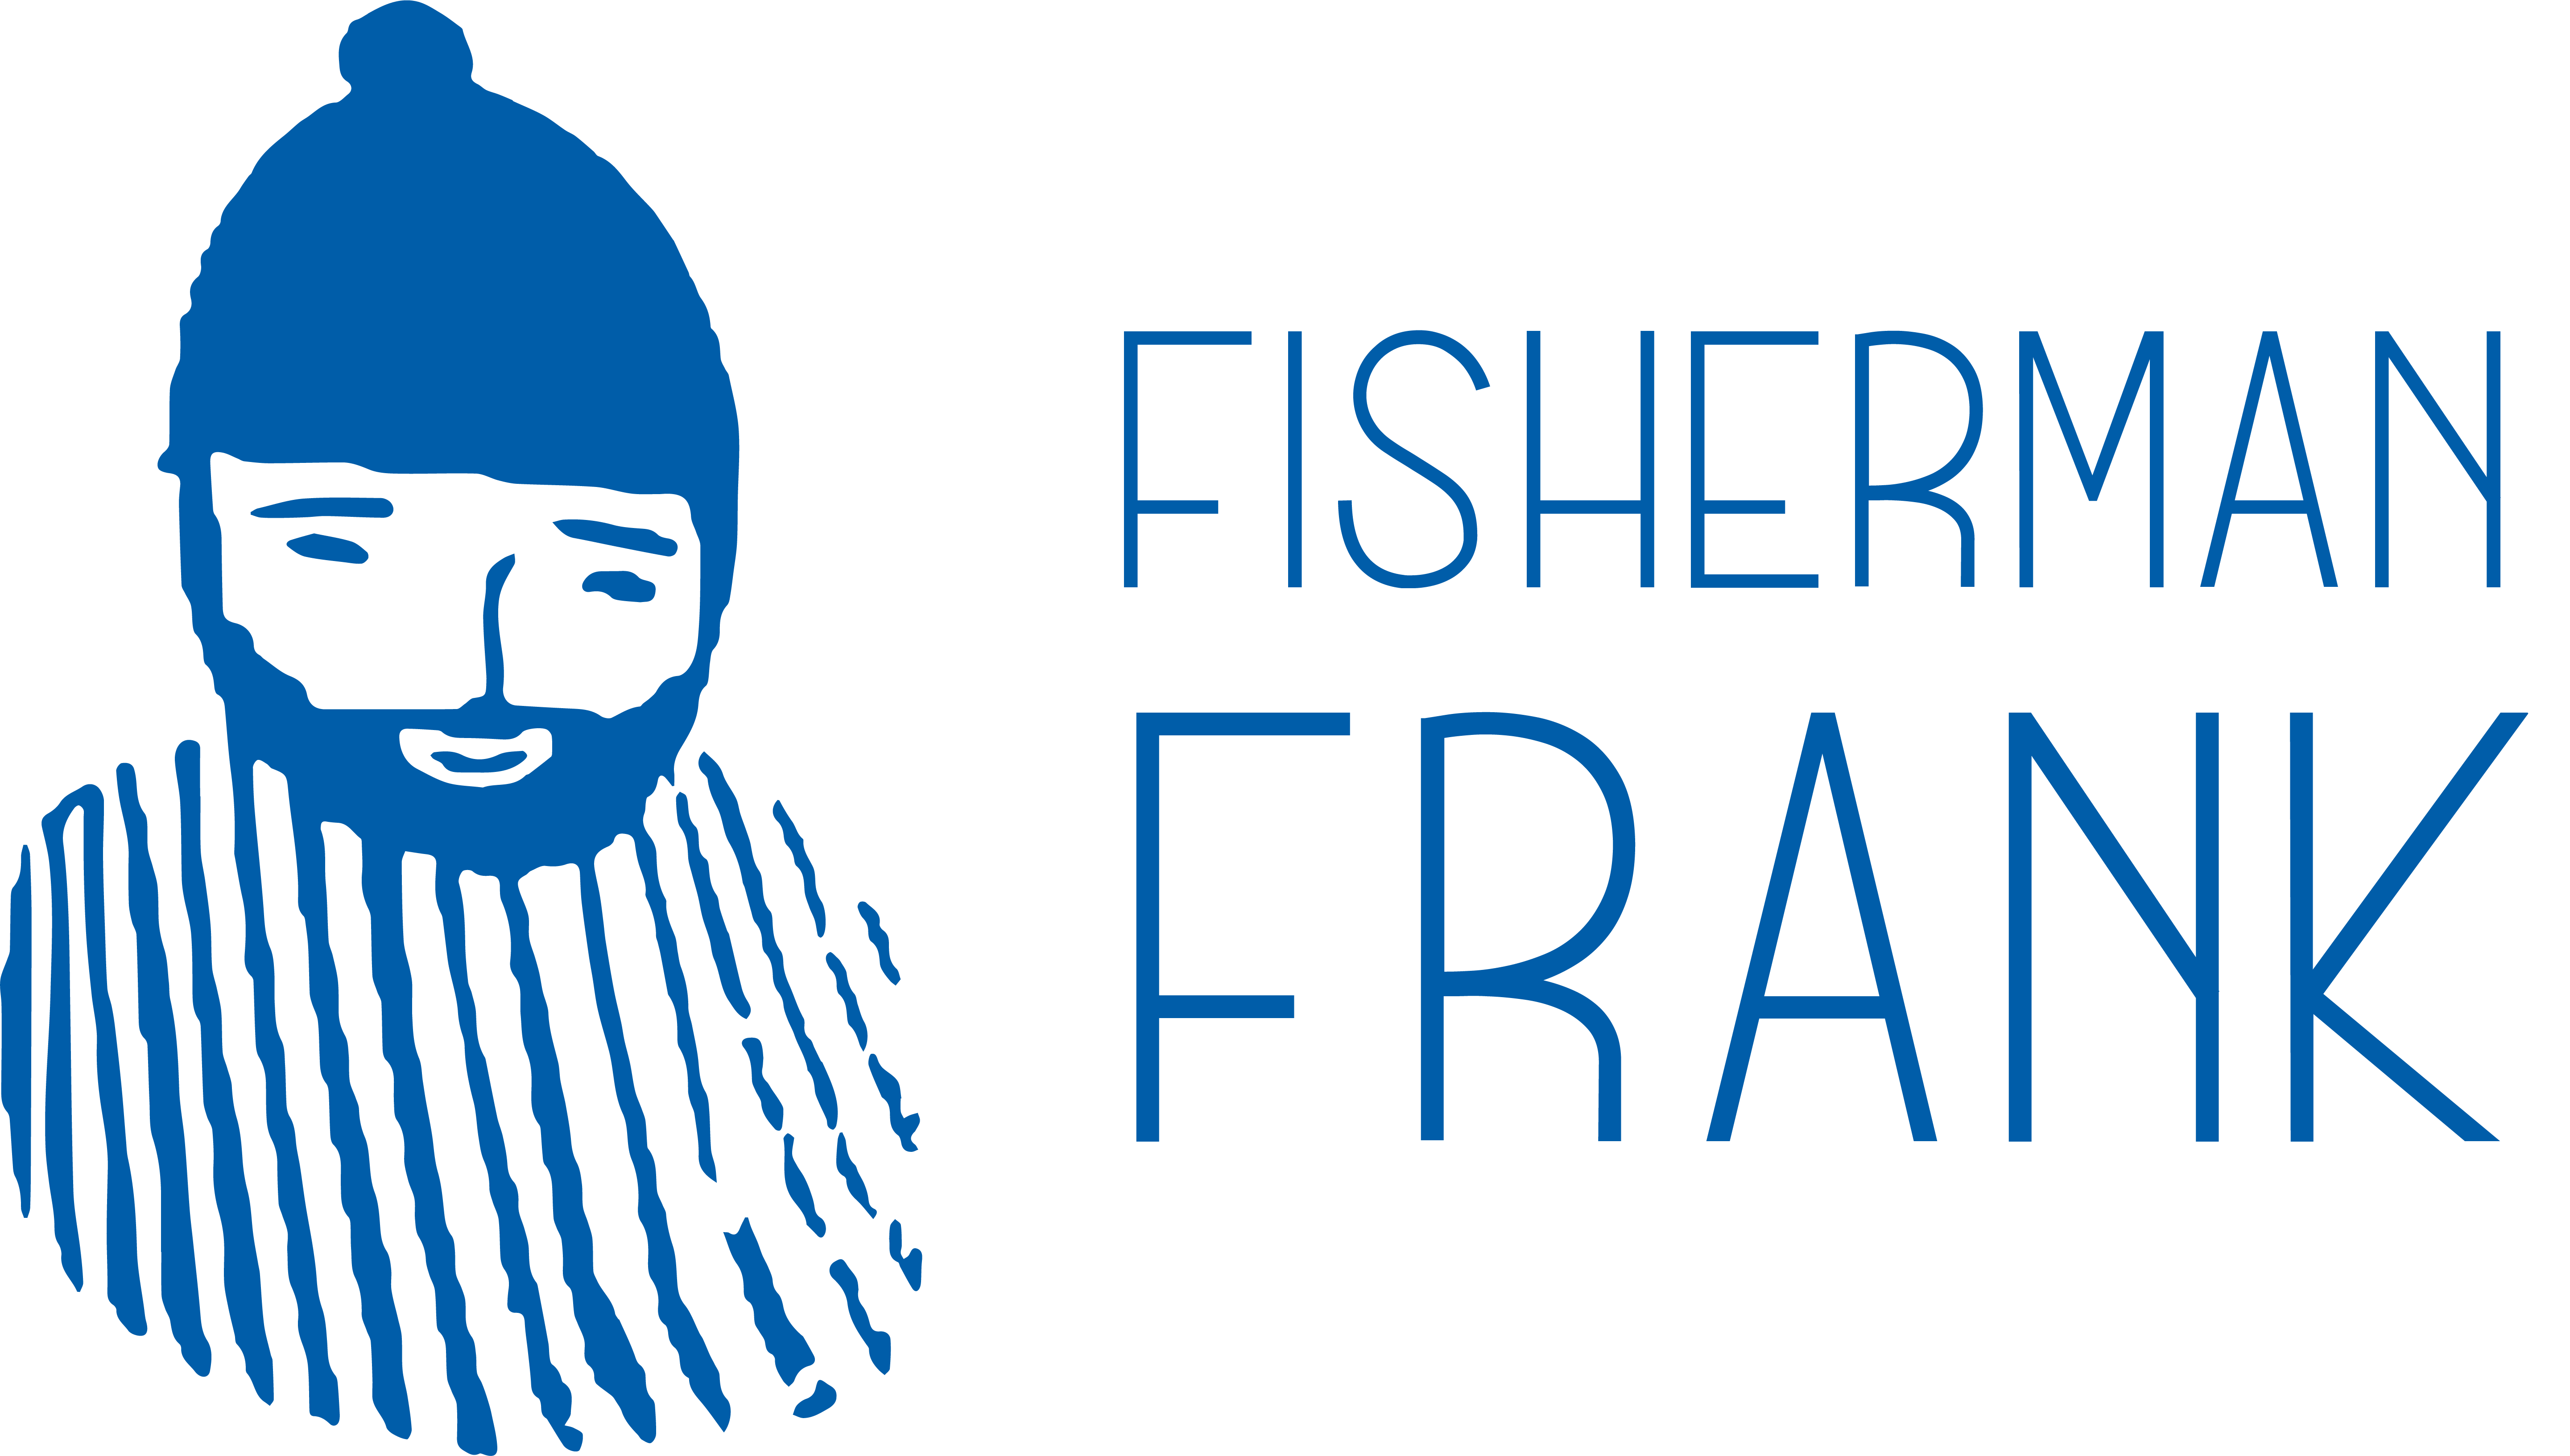 fisherman frank brand logo